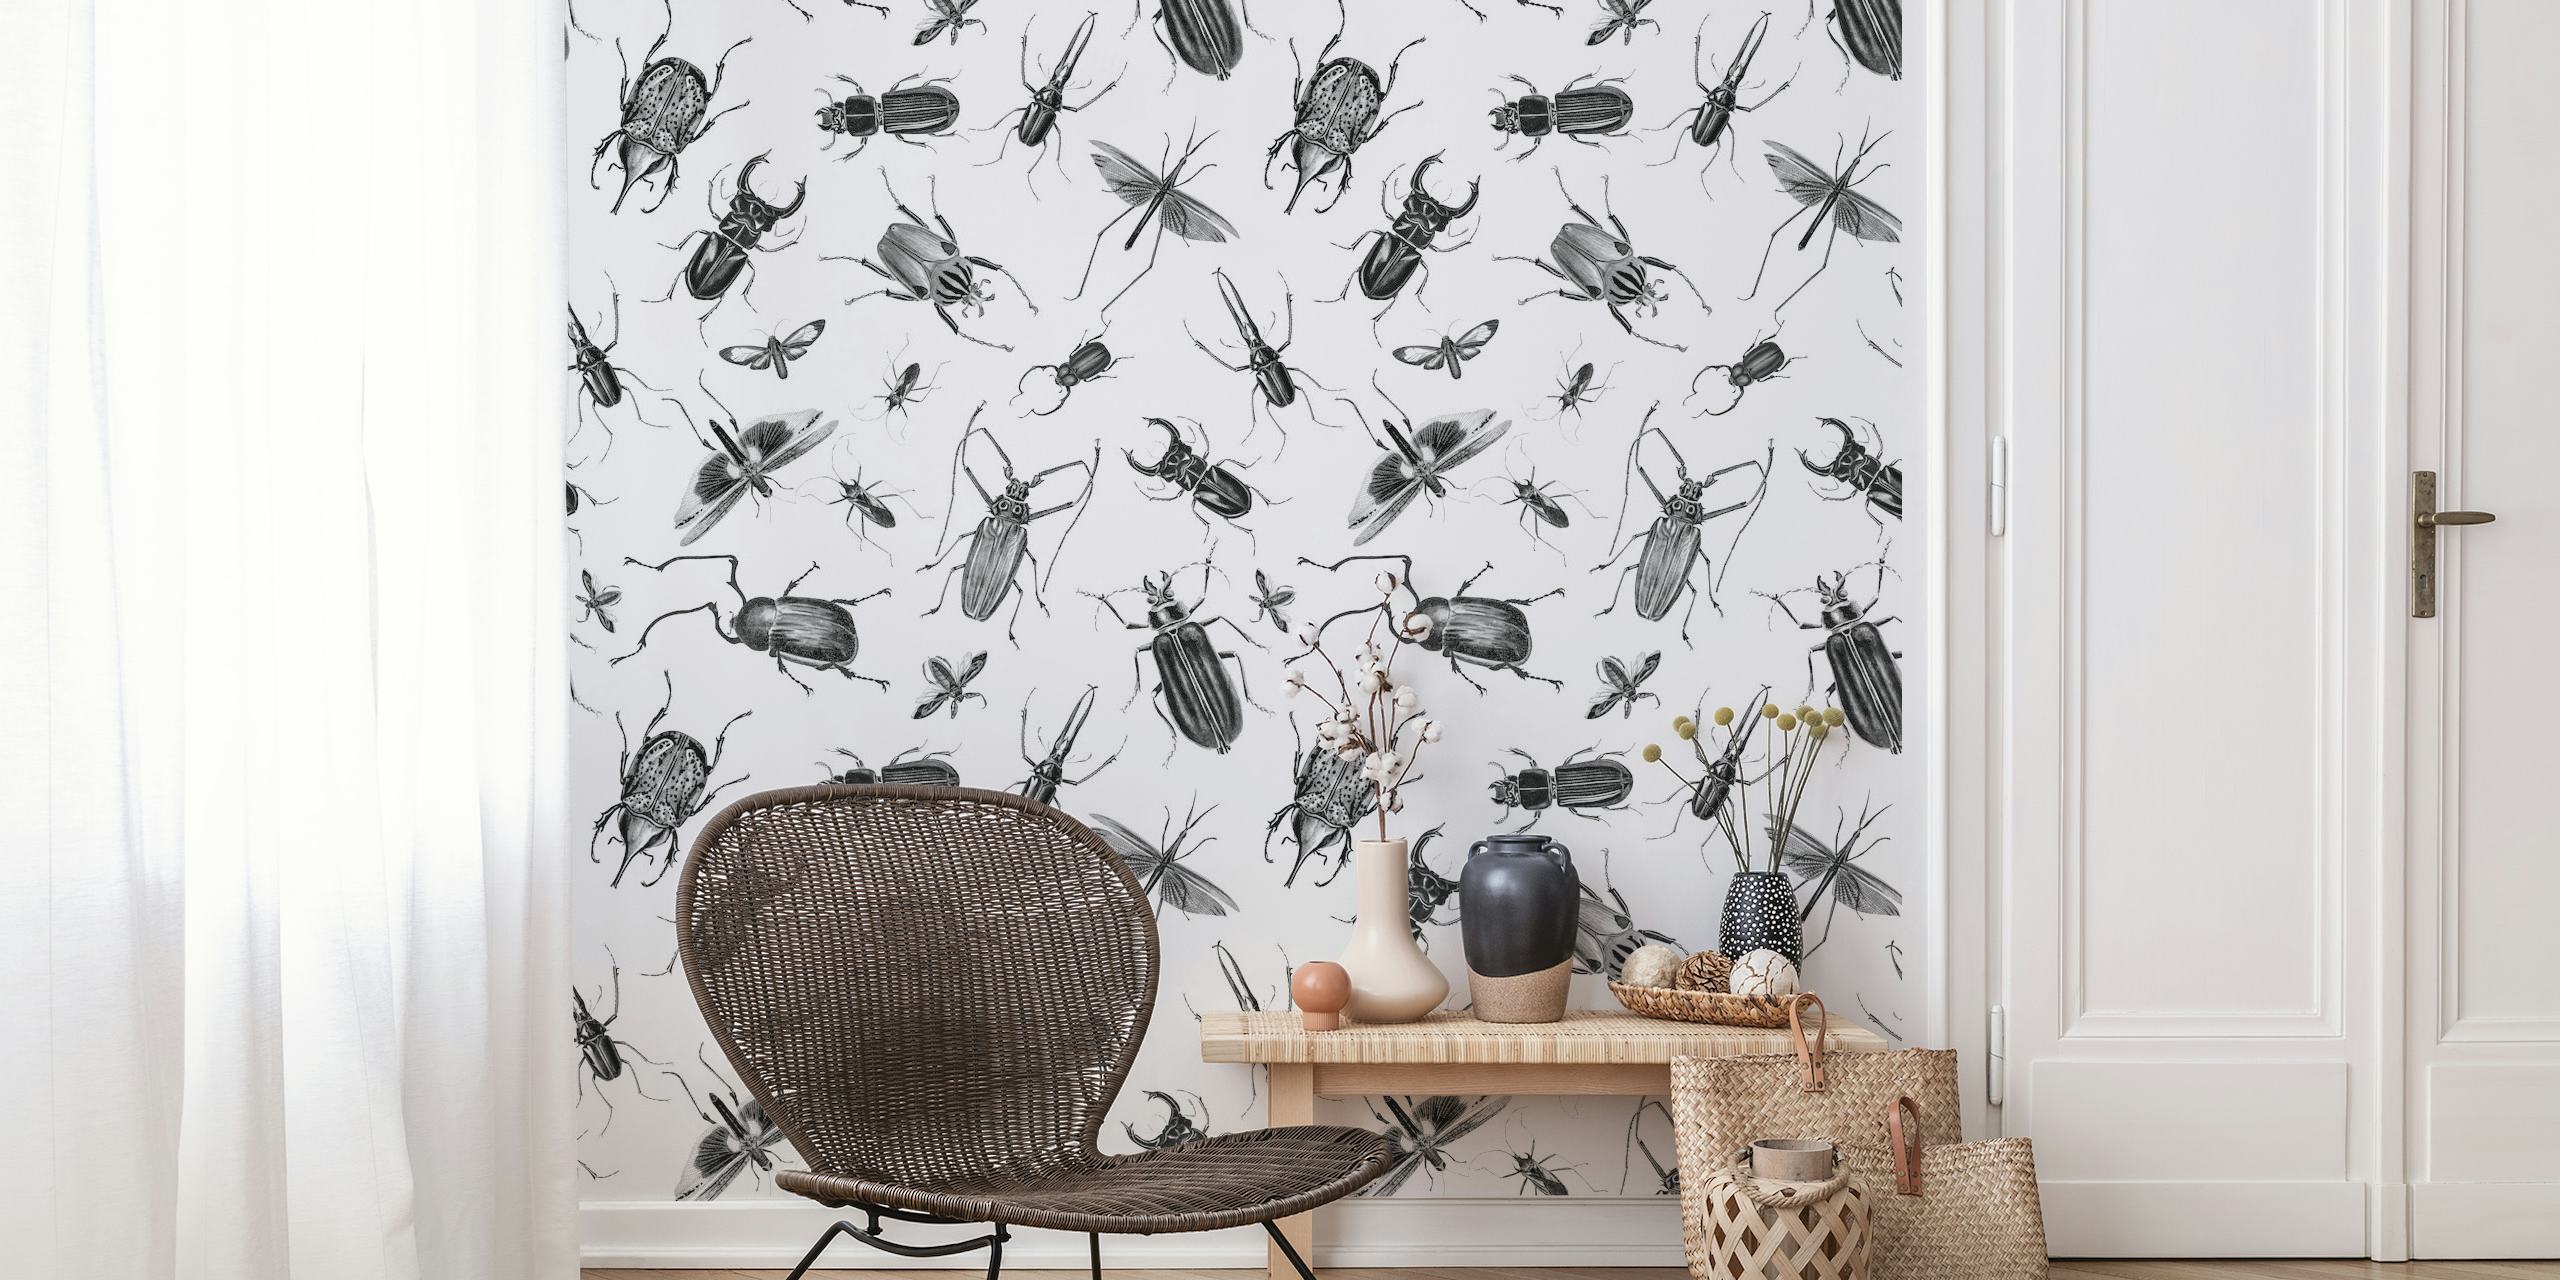 Vintage Beetles And Bugs papel pintado